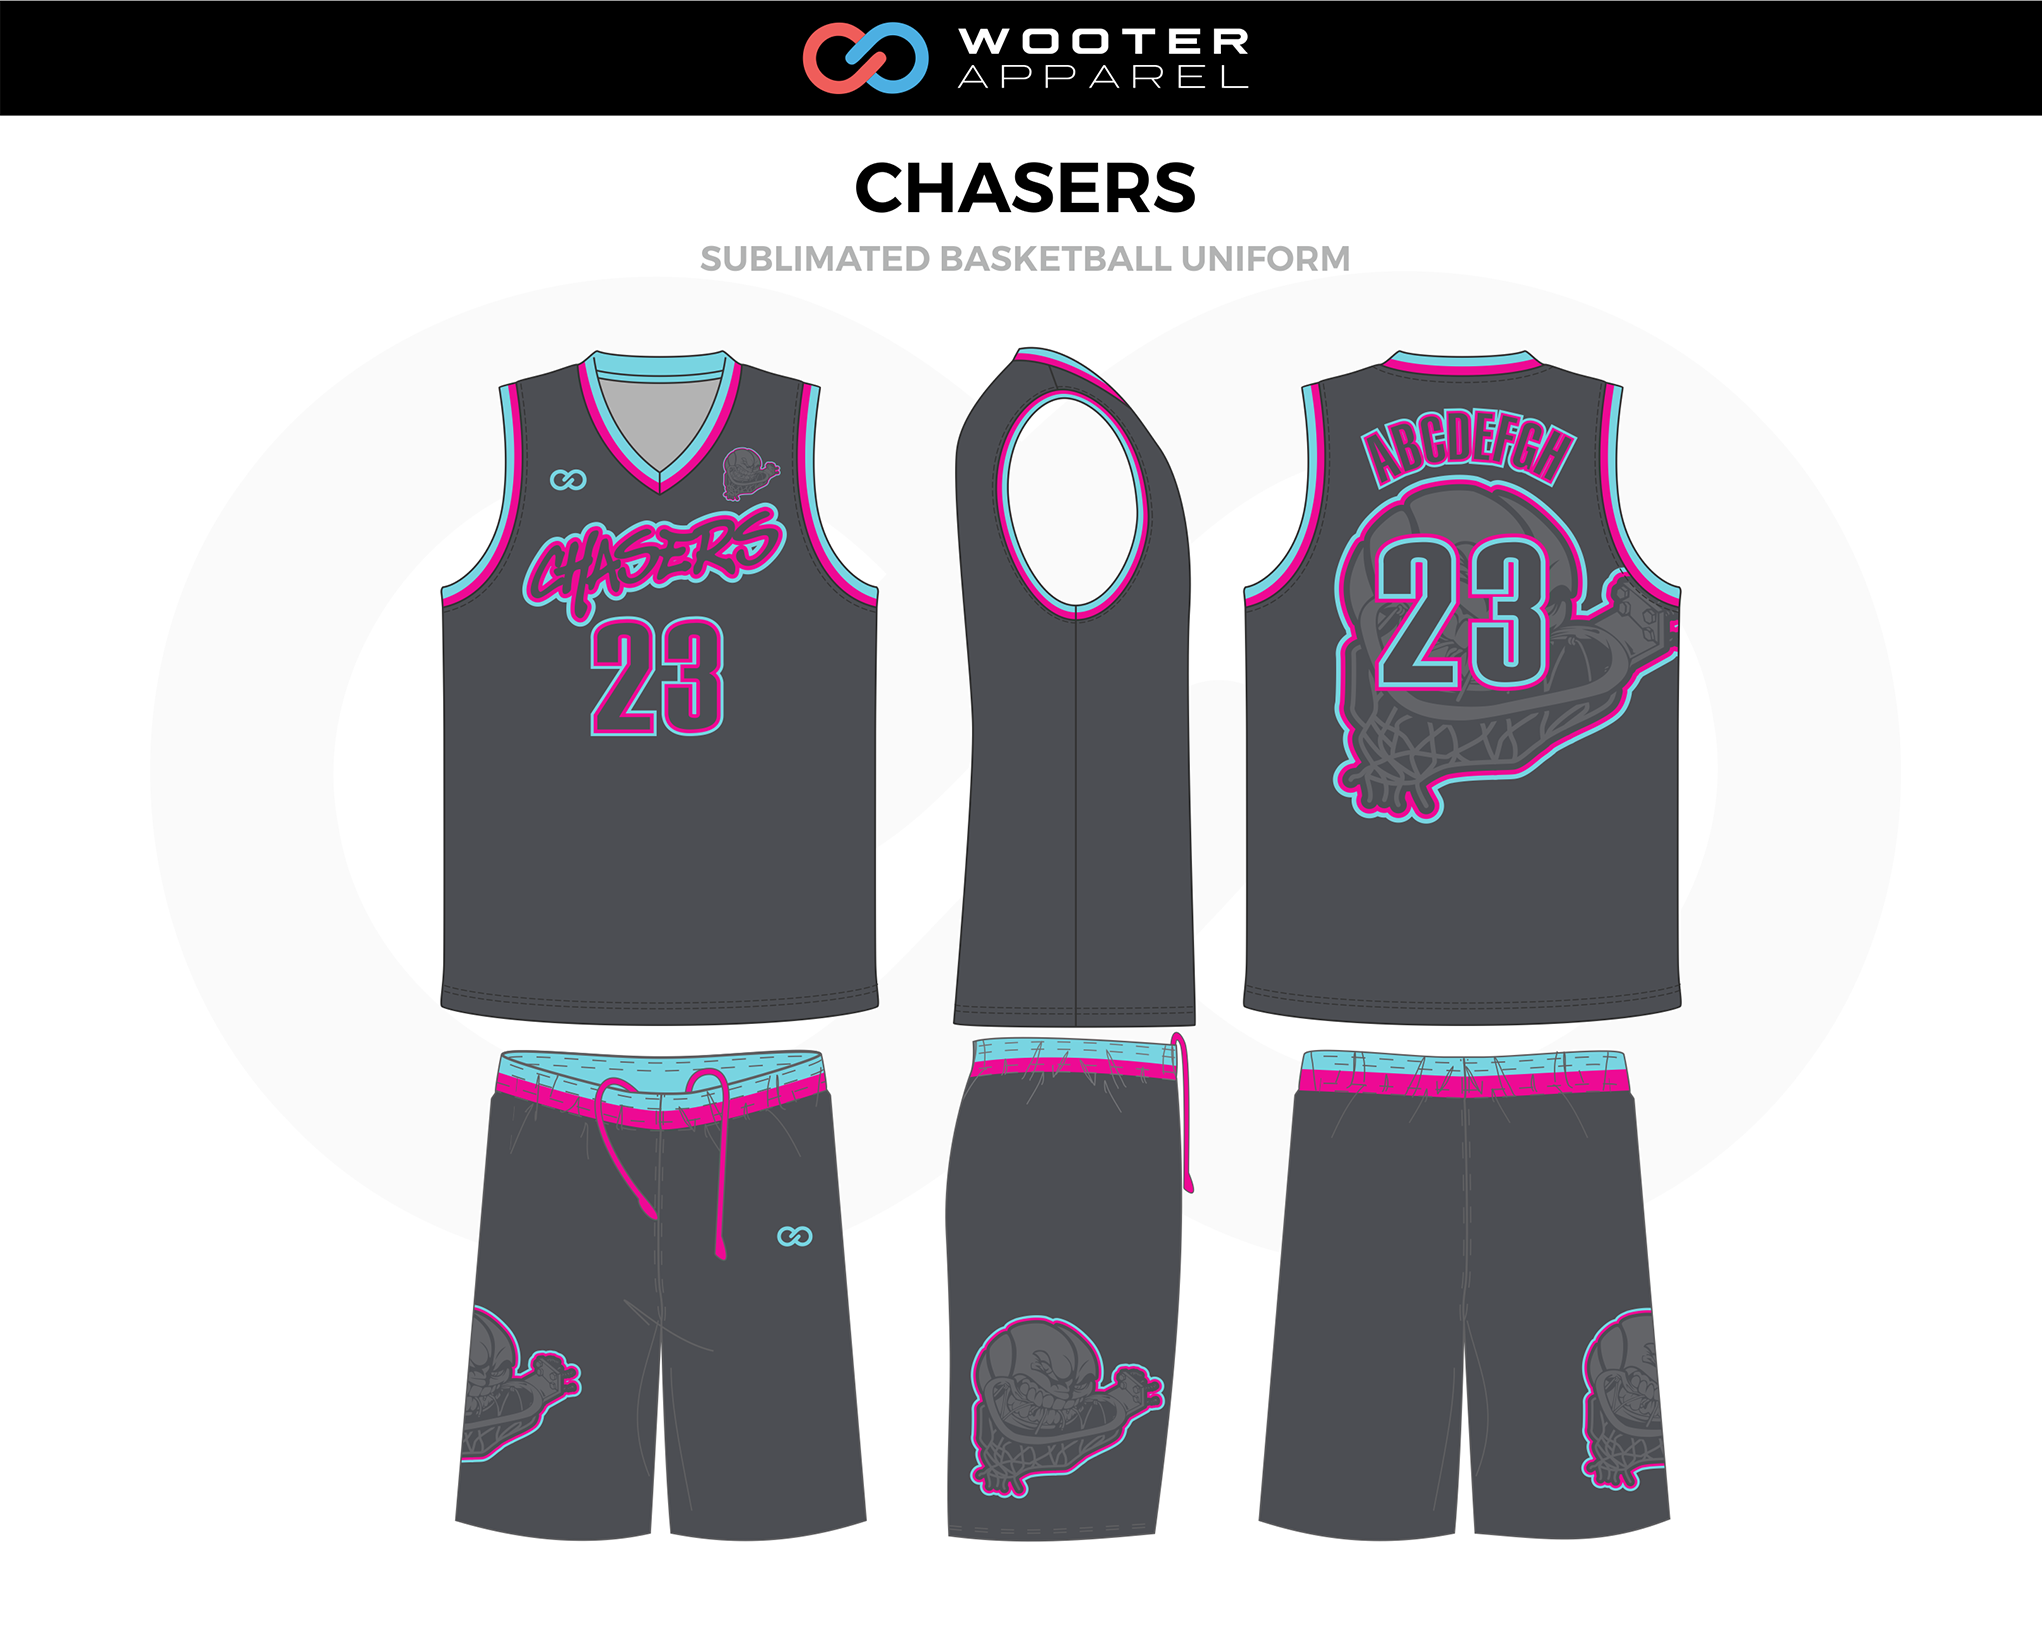 Custom Basketball Uniforms || Wooter Apparel